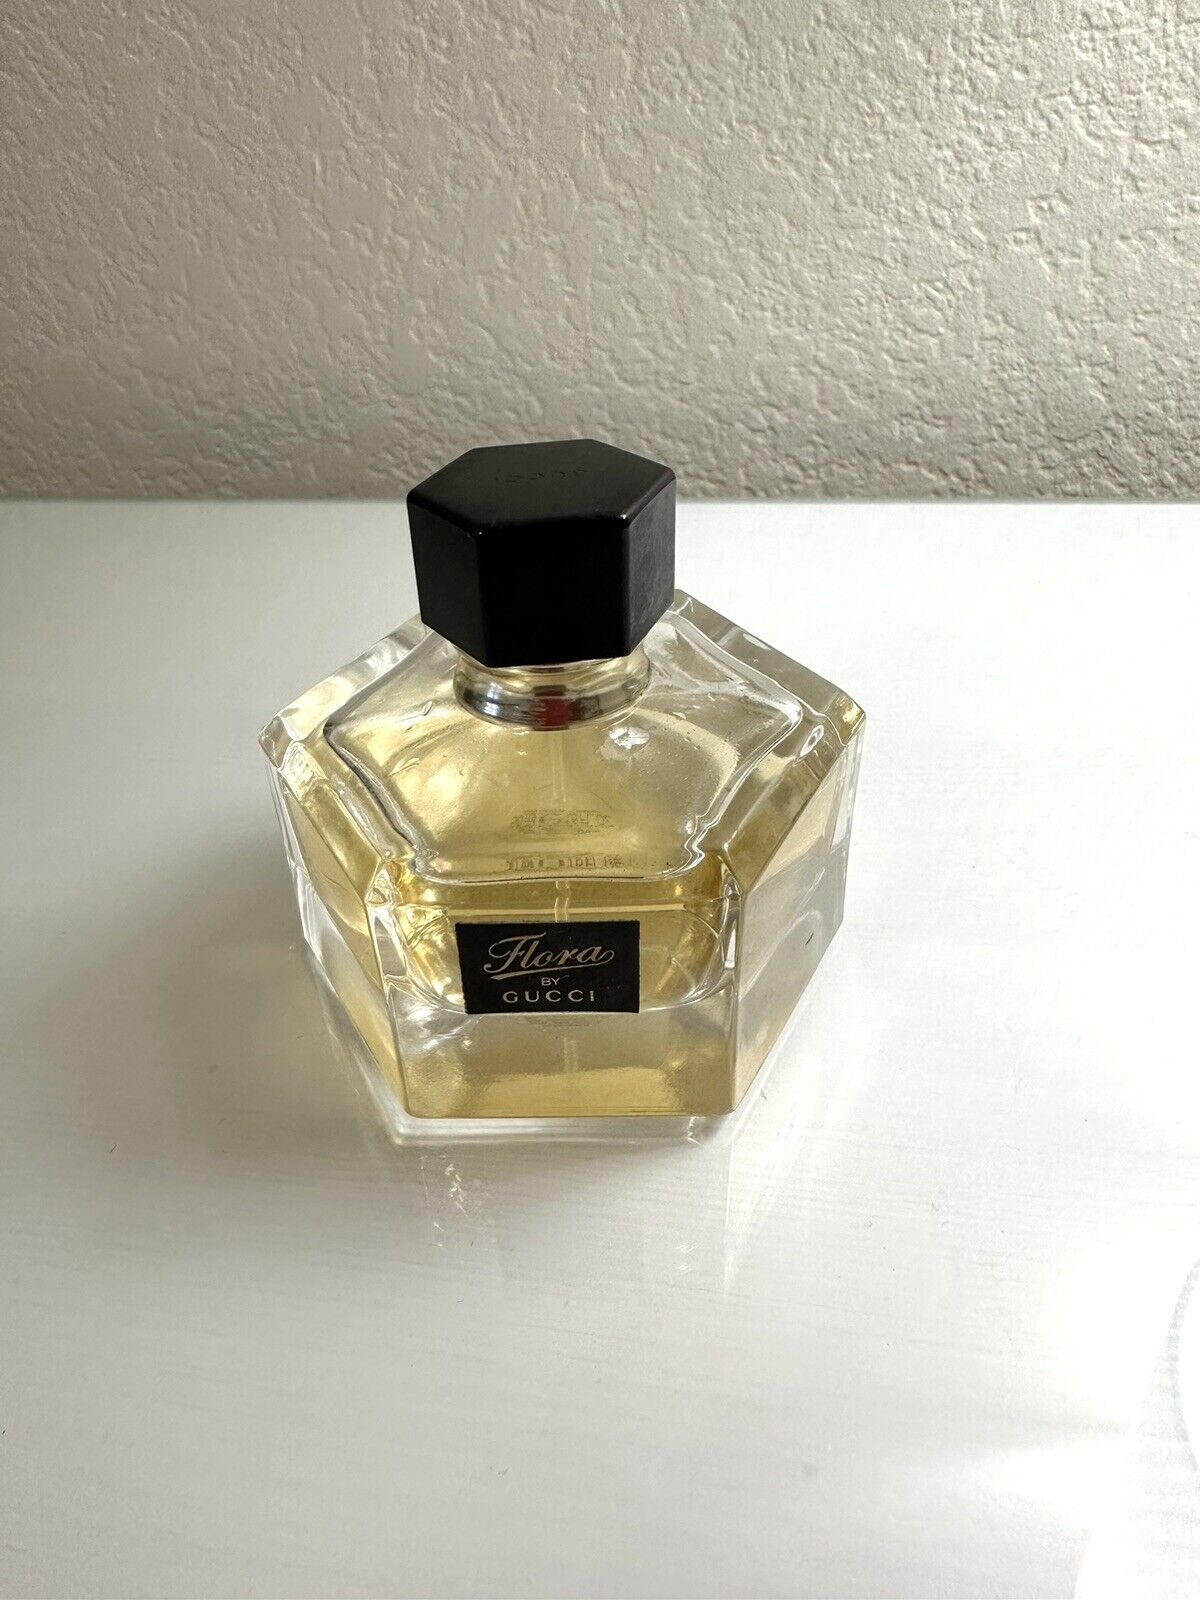 Flora by Gucci For Women 1.6 oz / 50ml Eau de Parfum Spray EDP Perfume 95% Full